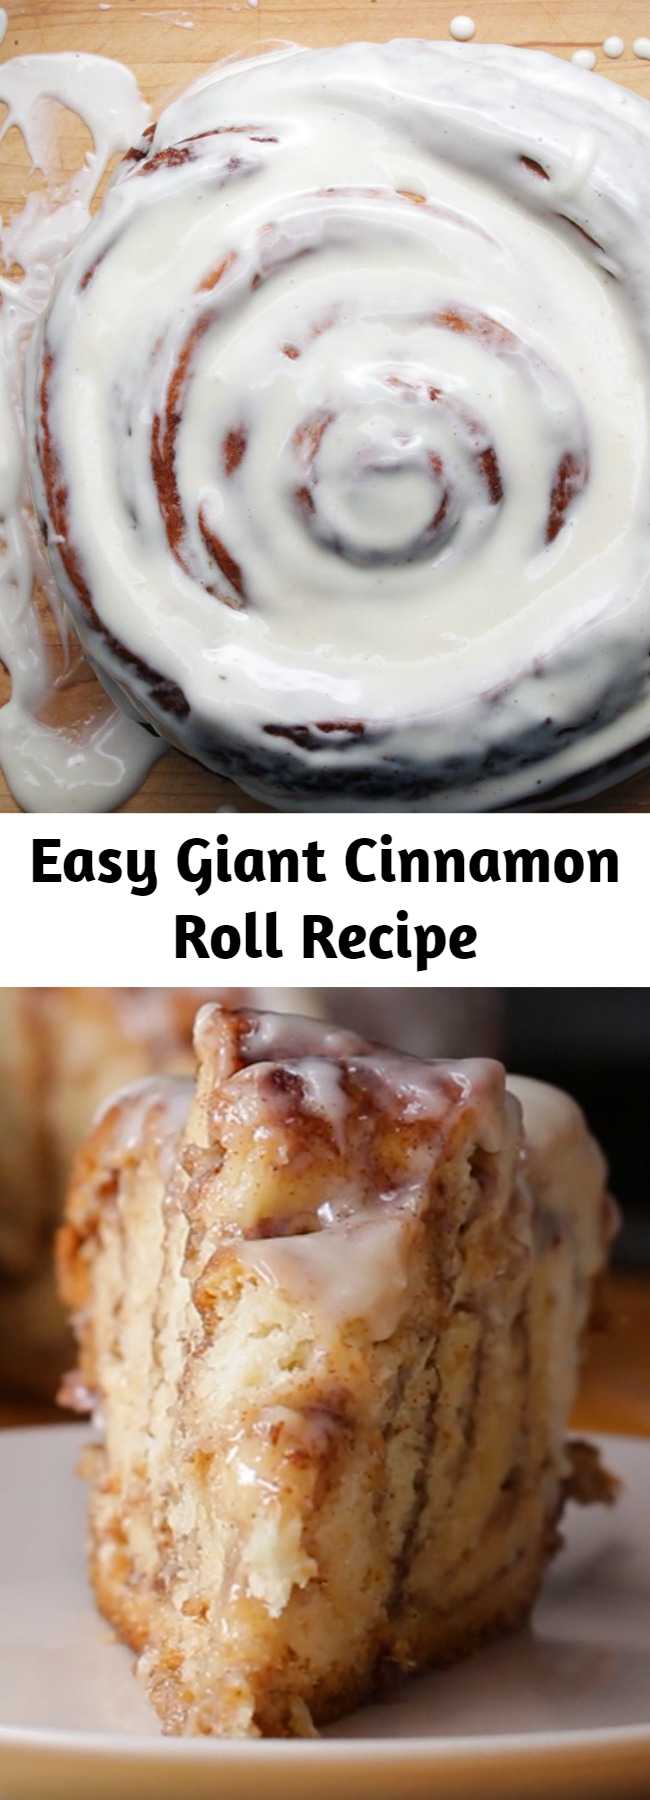 Easy Giant Cinnamon Roll Recipe